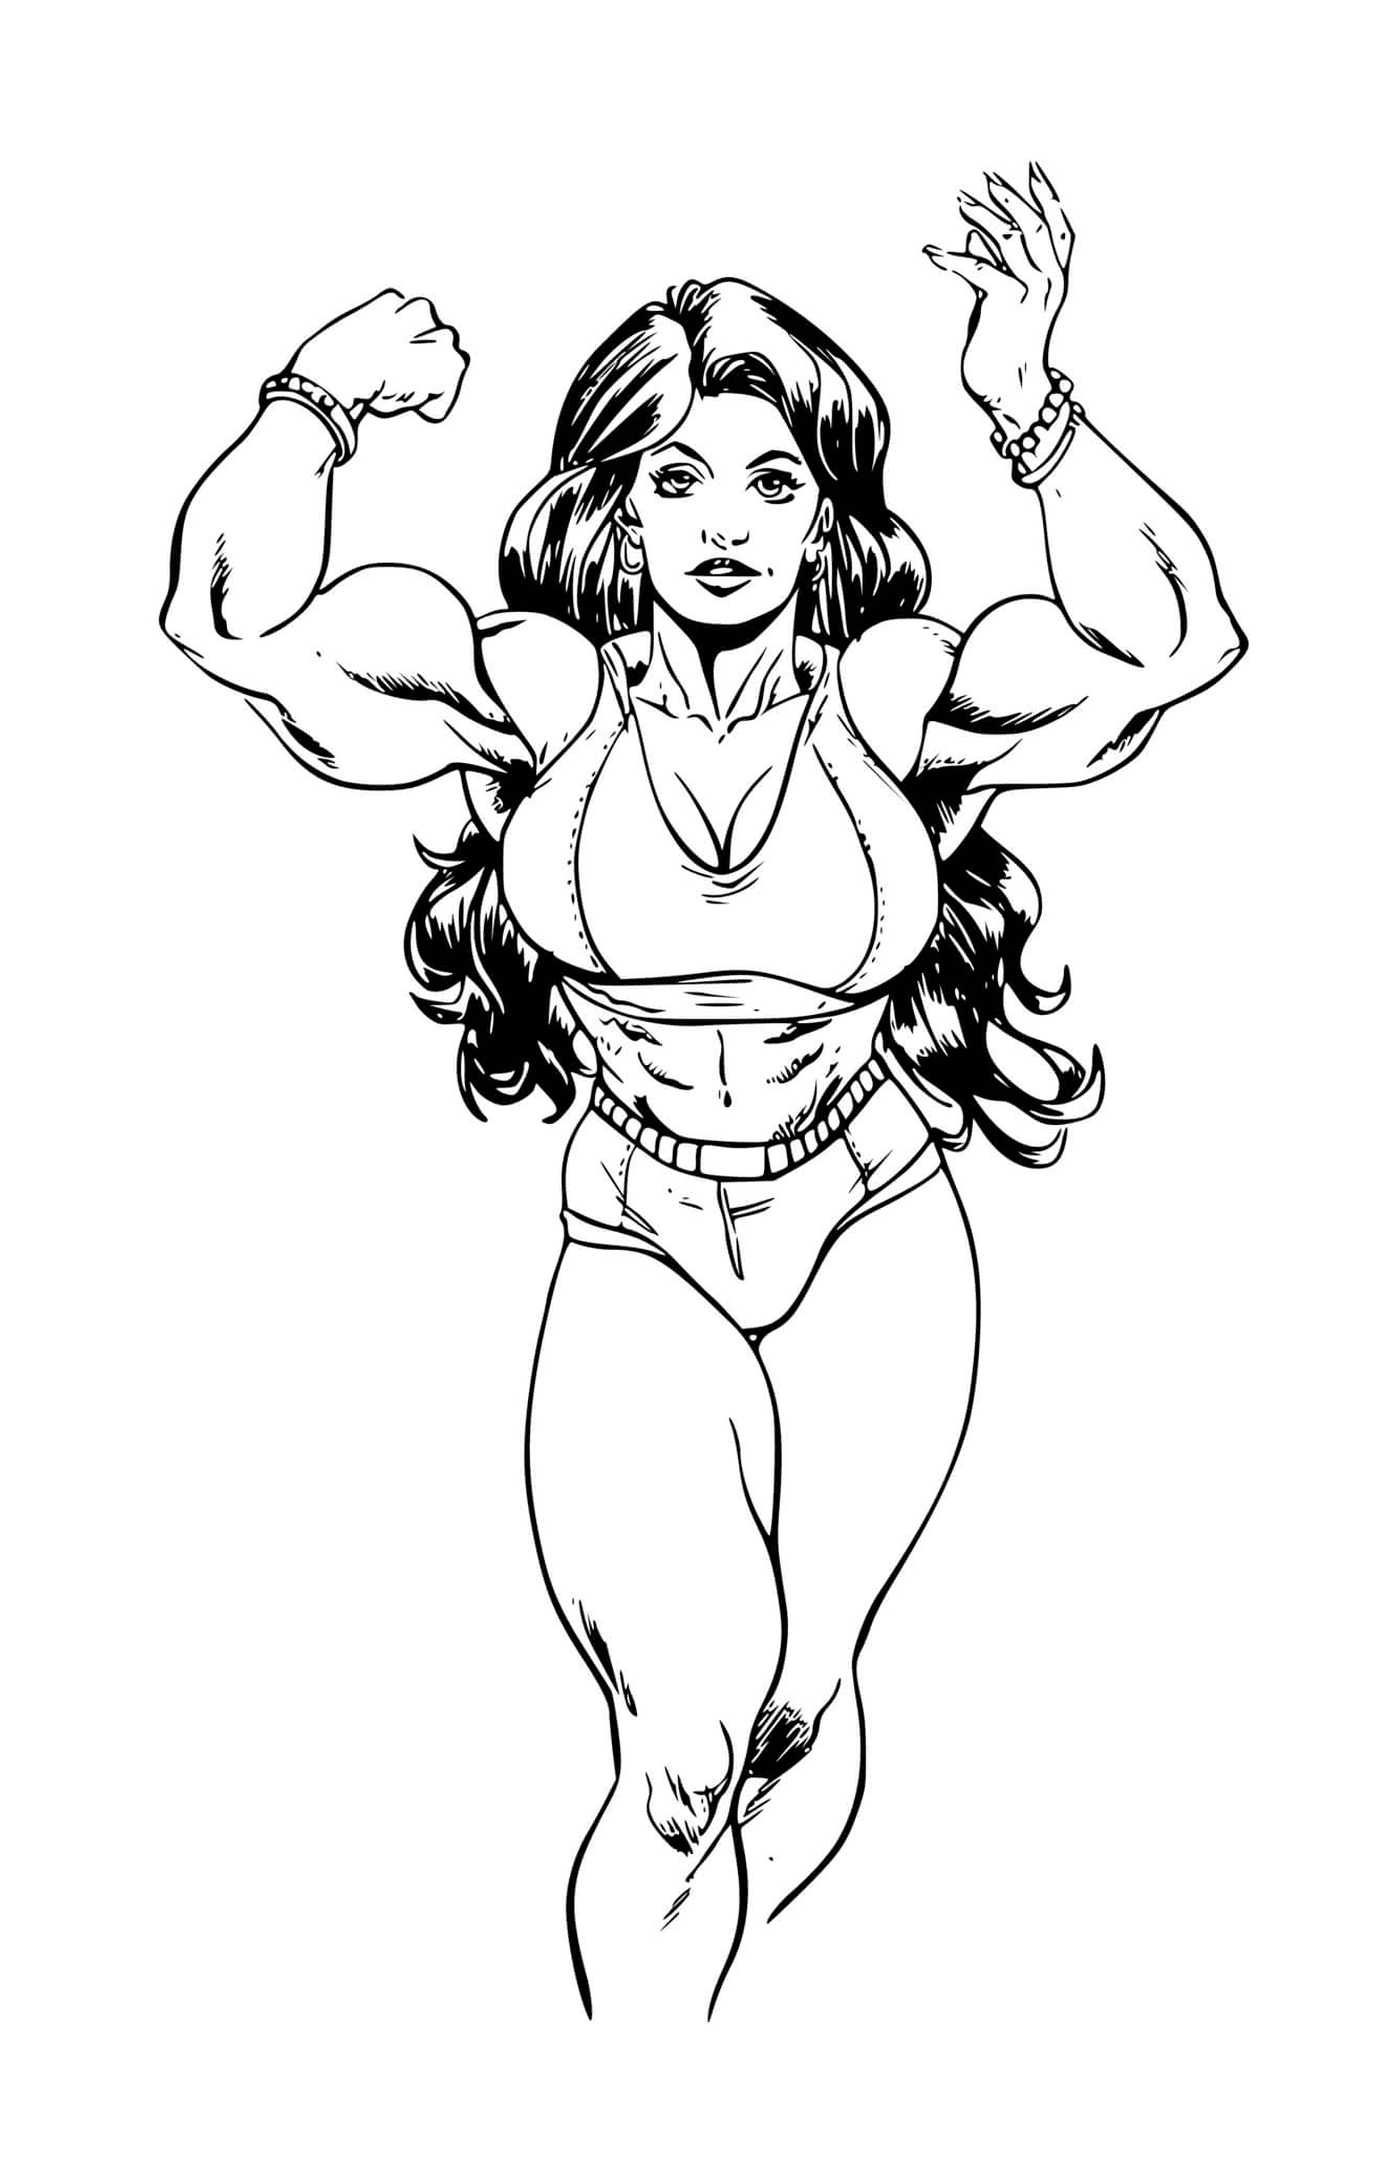  Super heroine She-Hulk 